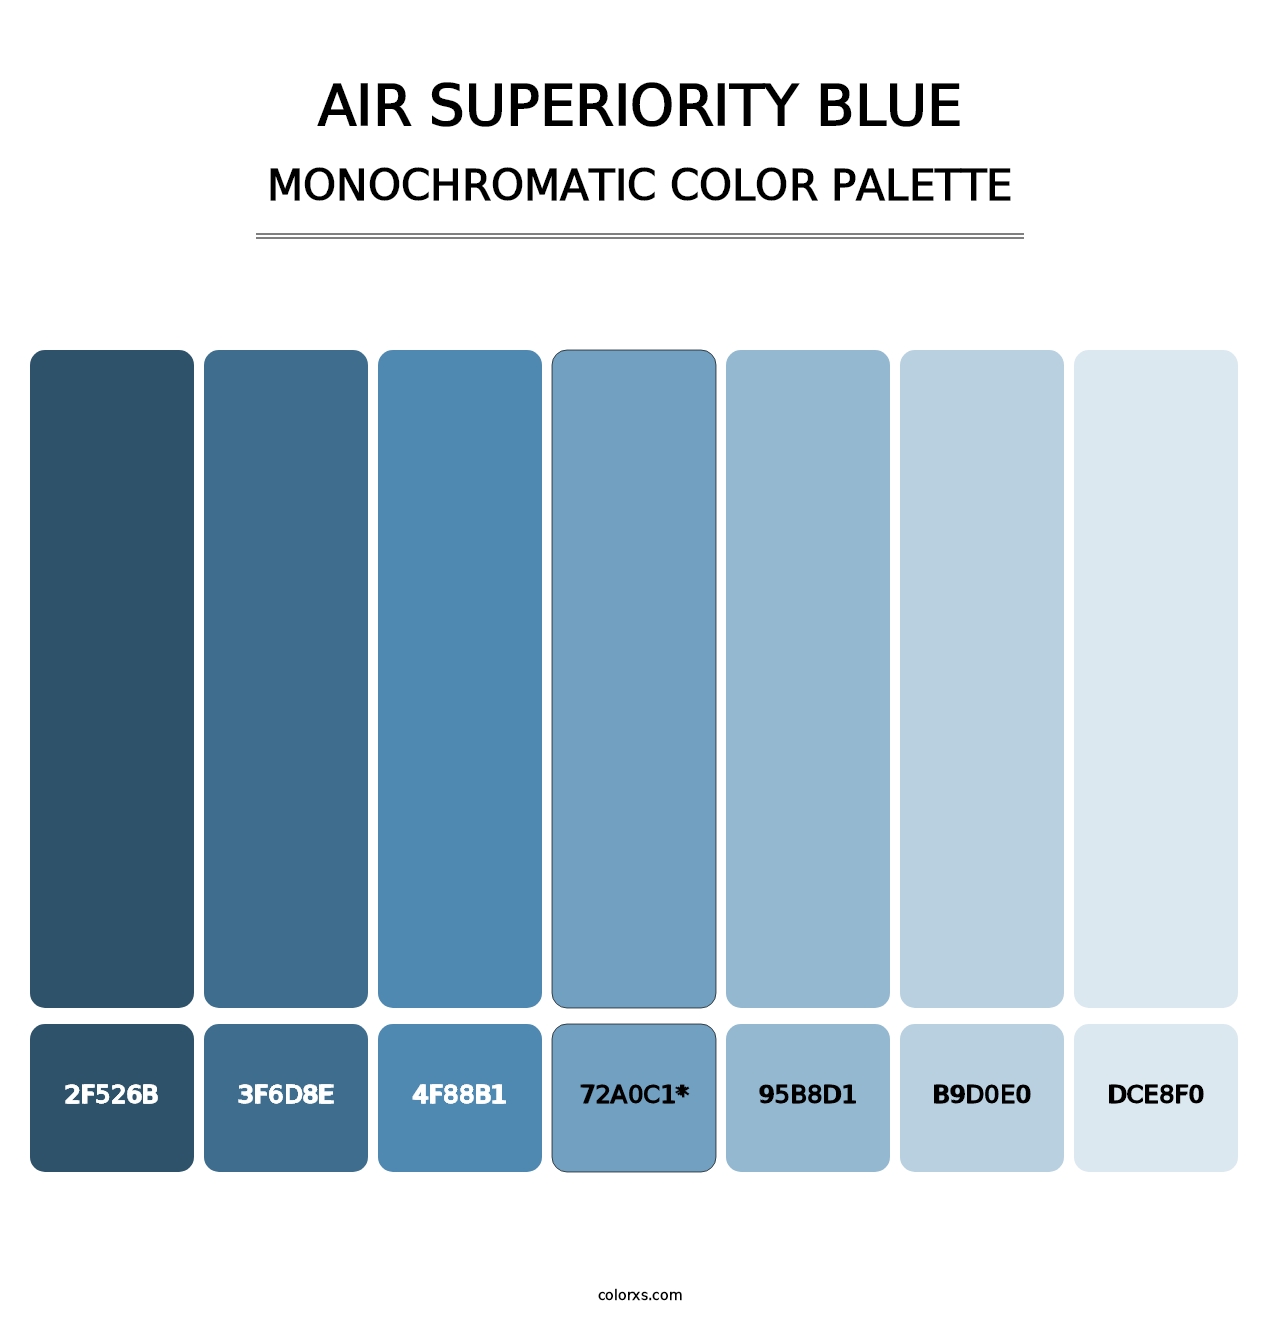 Air Superiority Blue - Monochromatic Color Palette